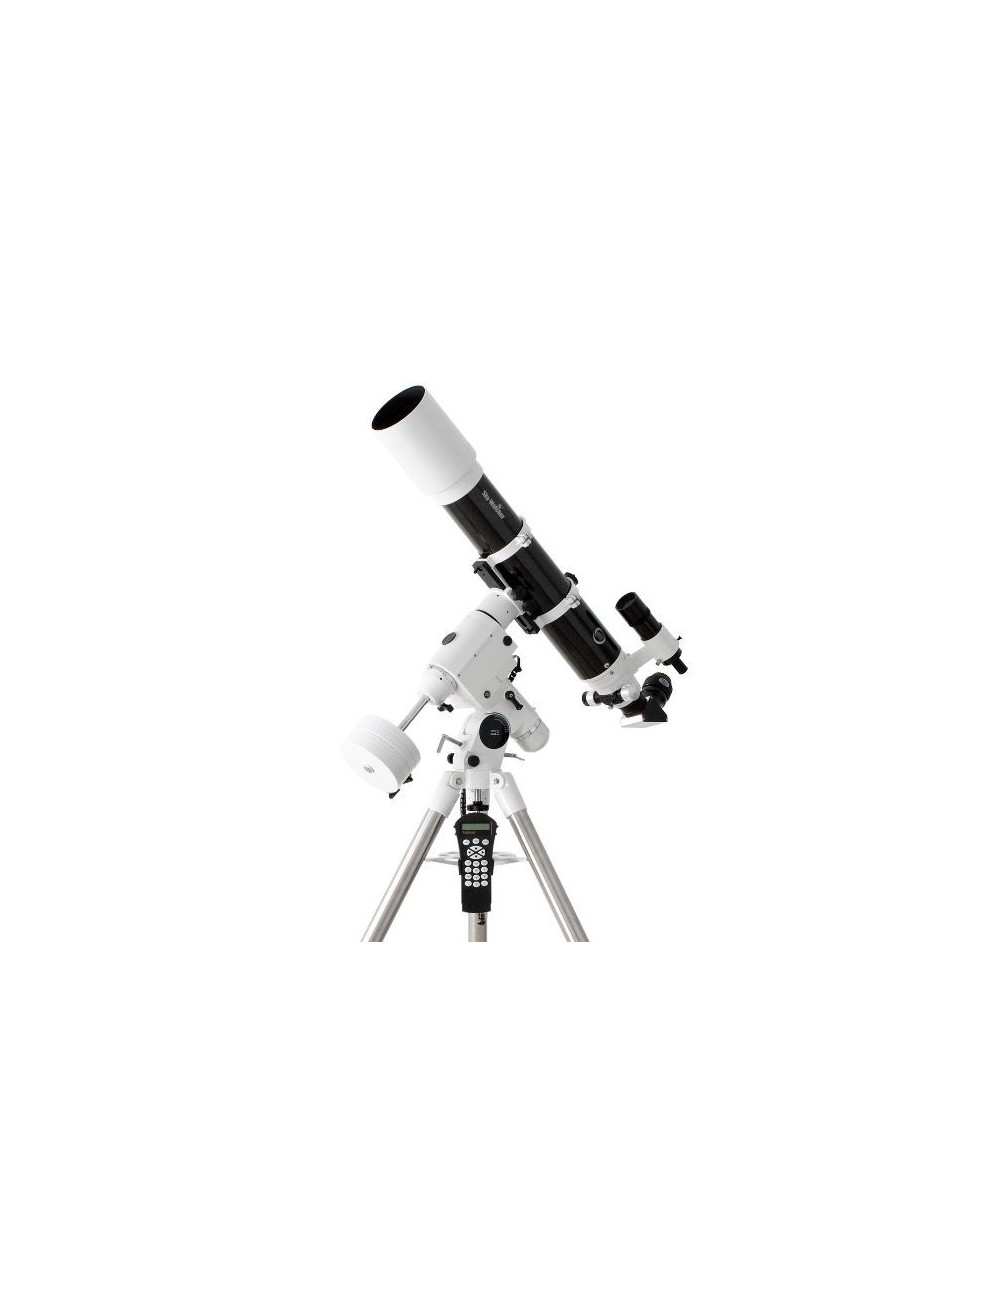 Lunette Sky-Watcher 120ED Black Diamond sur HEQ5 Pro Go-To-To